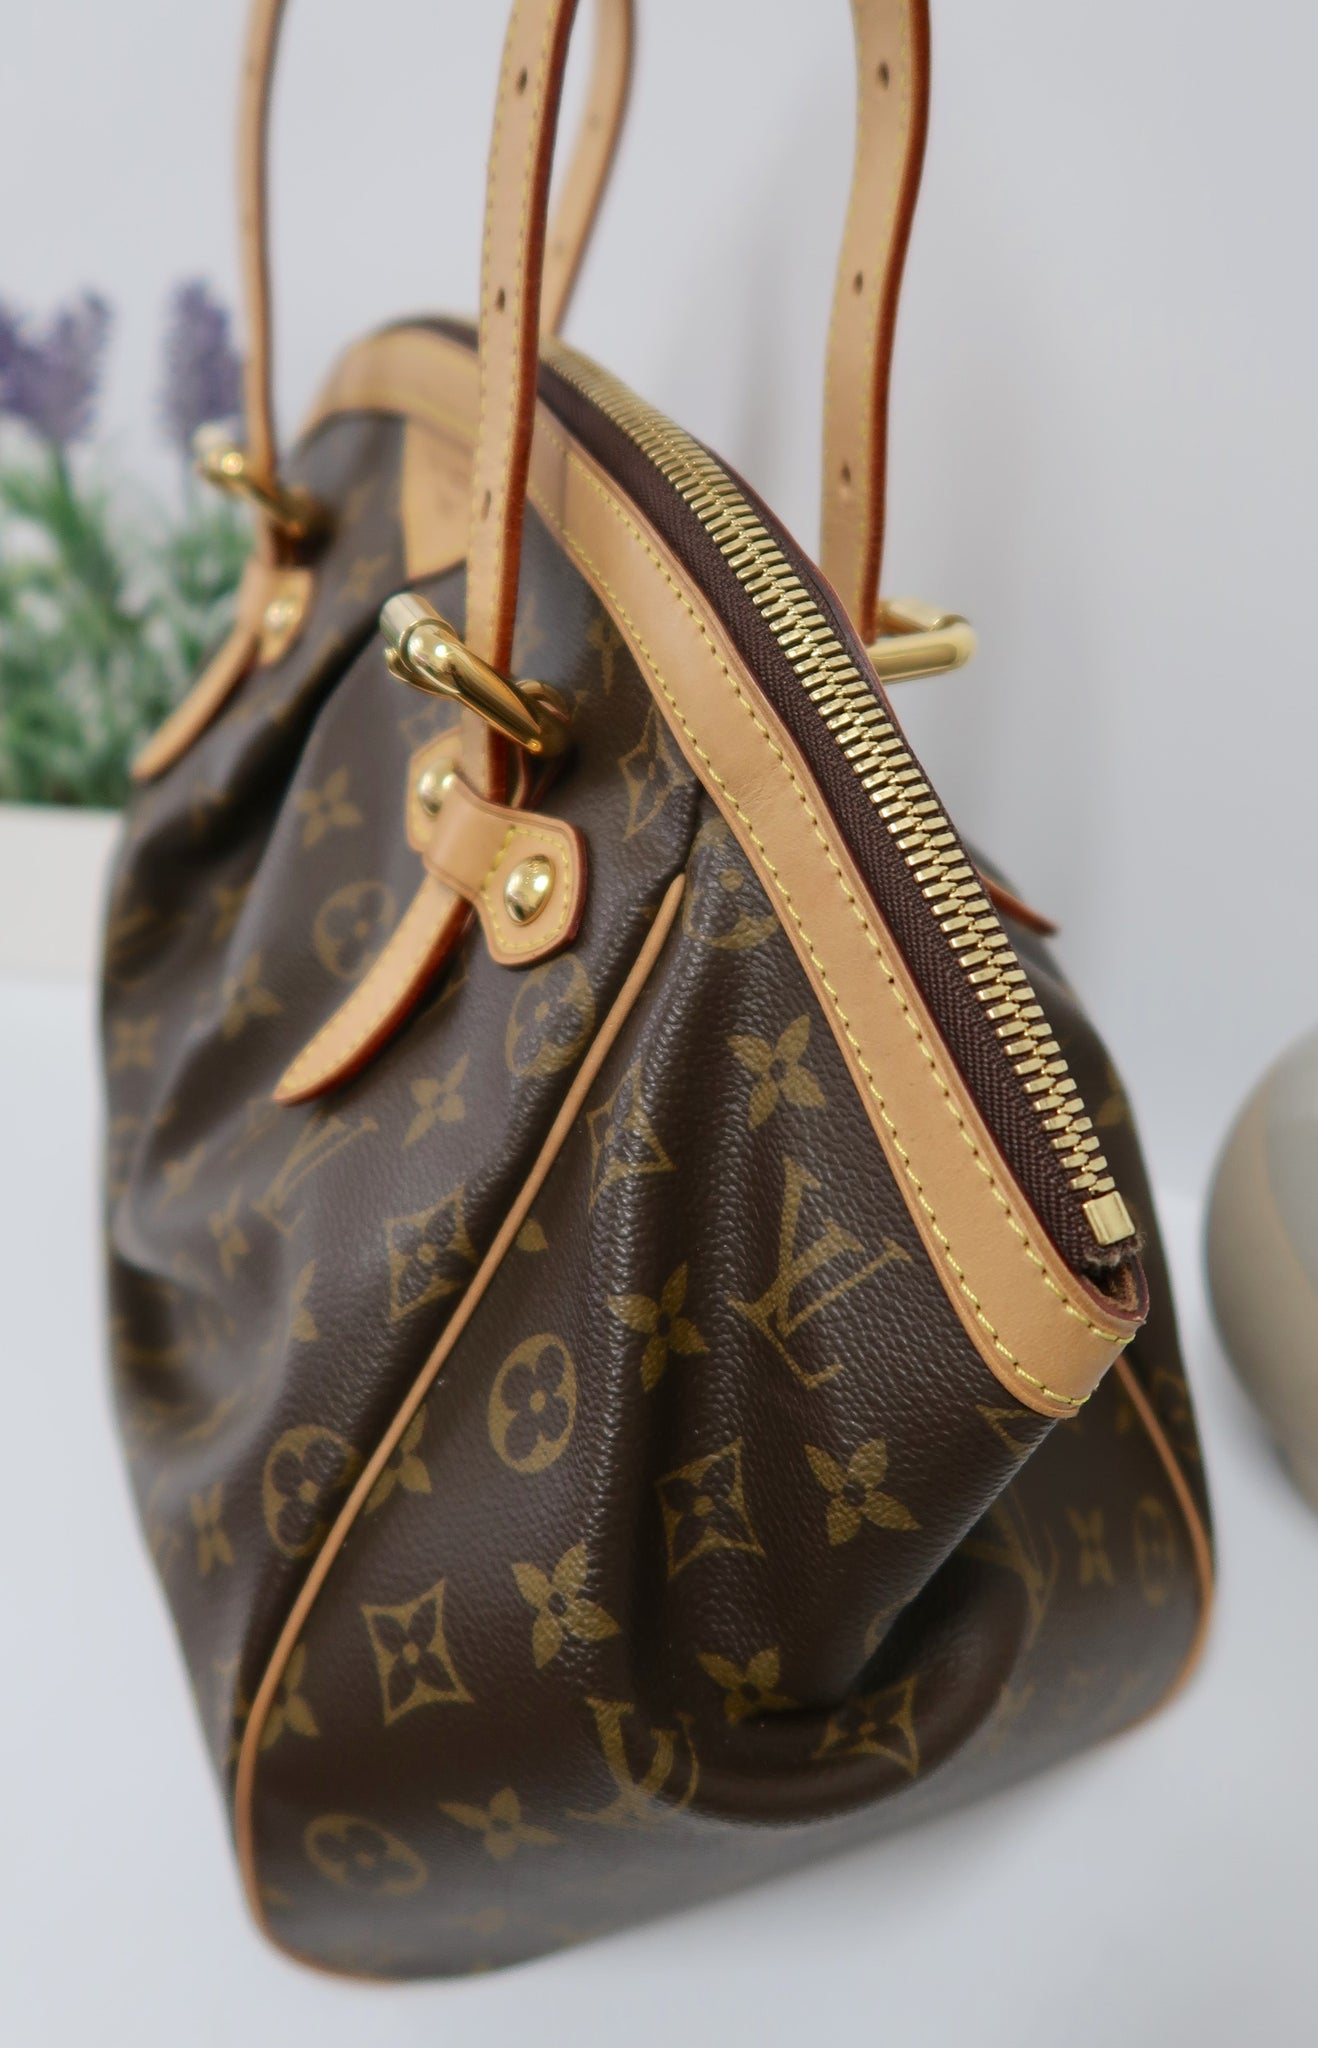 Louis Vuitton 'Tivoli GM' Bag